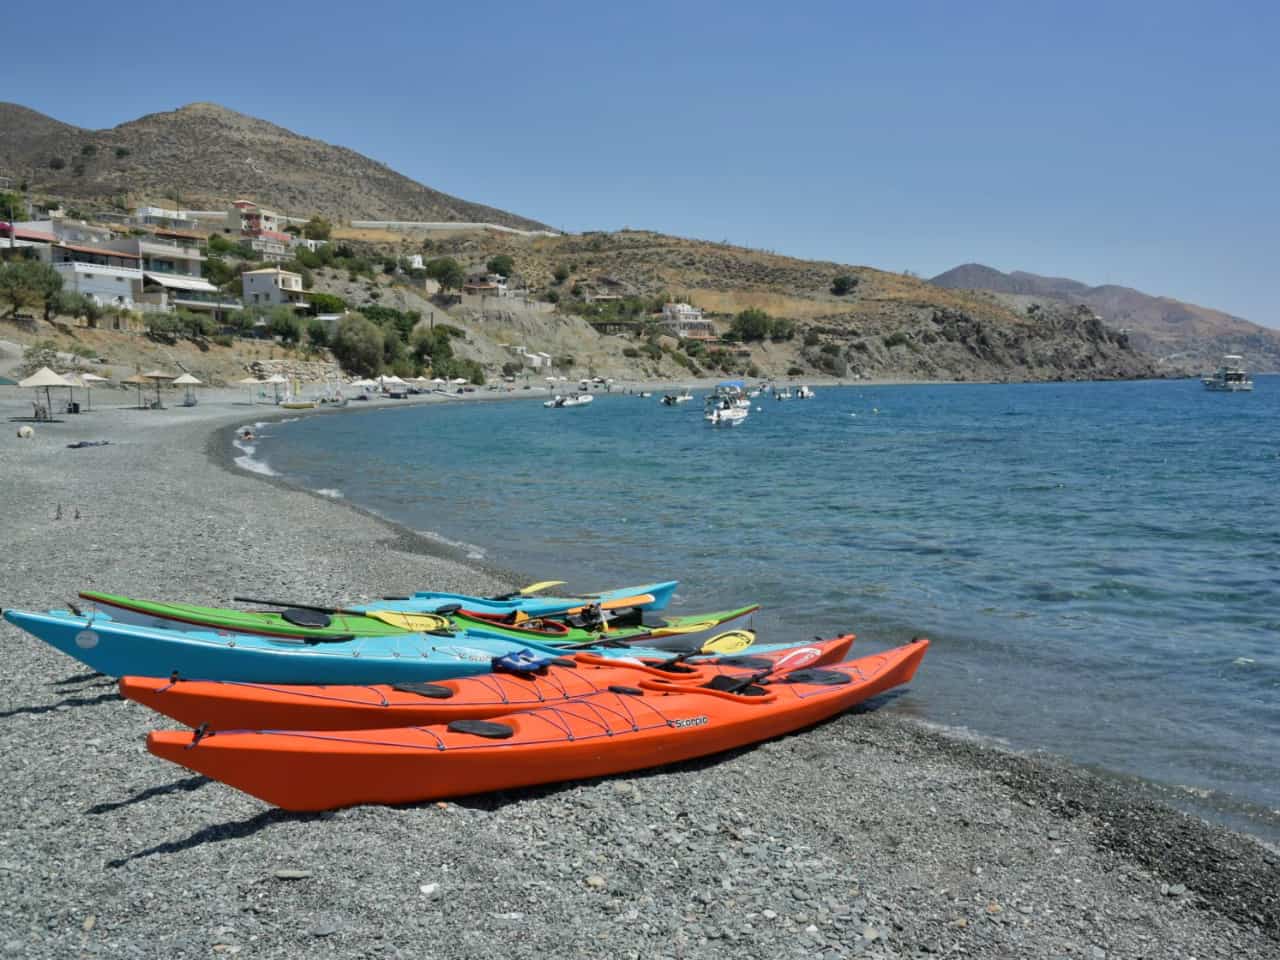 Sea Kayak Kaloi Limenes Lentas, best day trip sea kayak, sea kayak kali limenes matala agia galini, best sea kayak trip crete